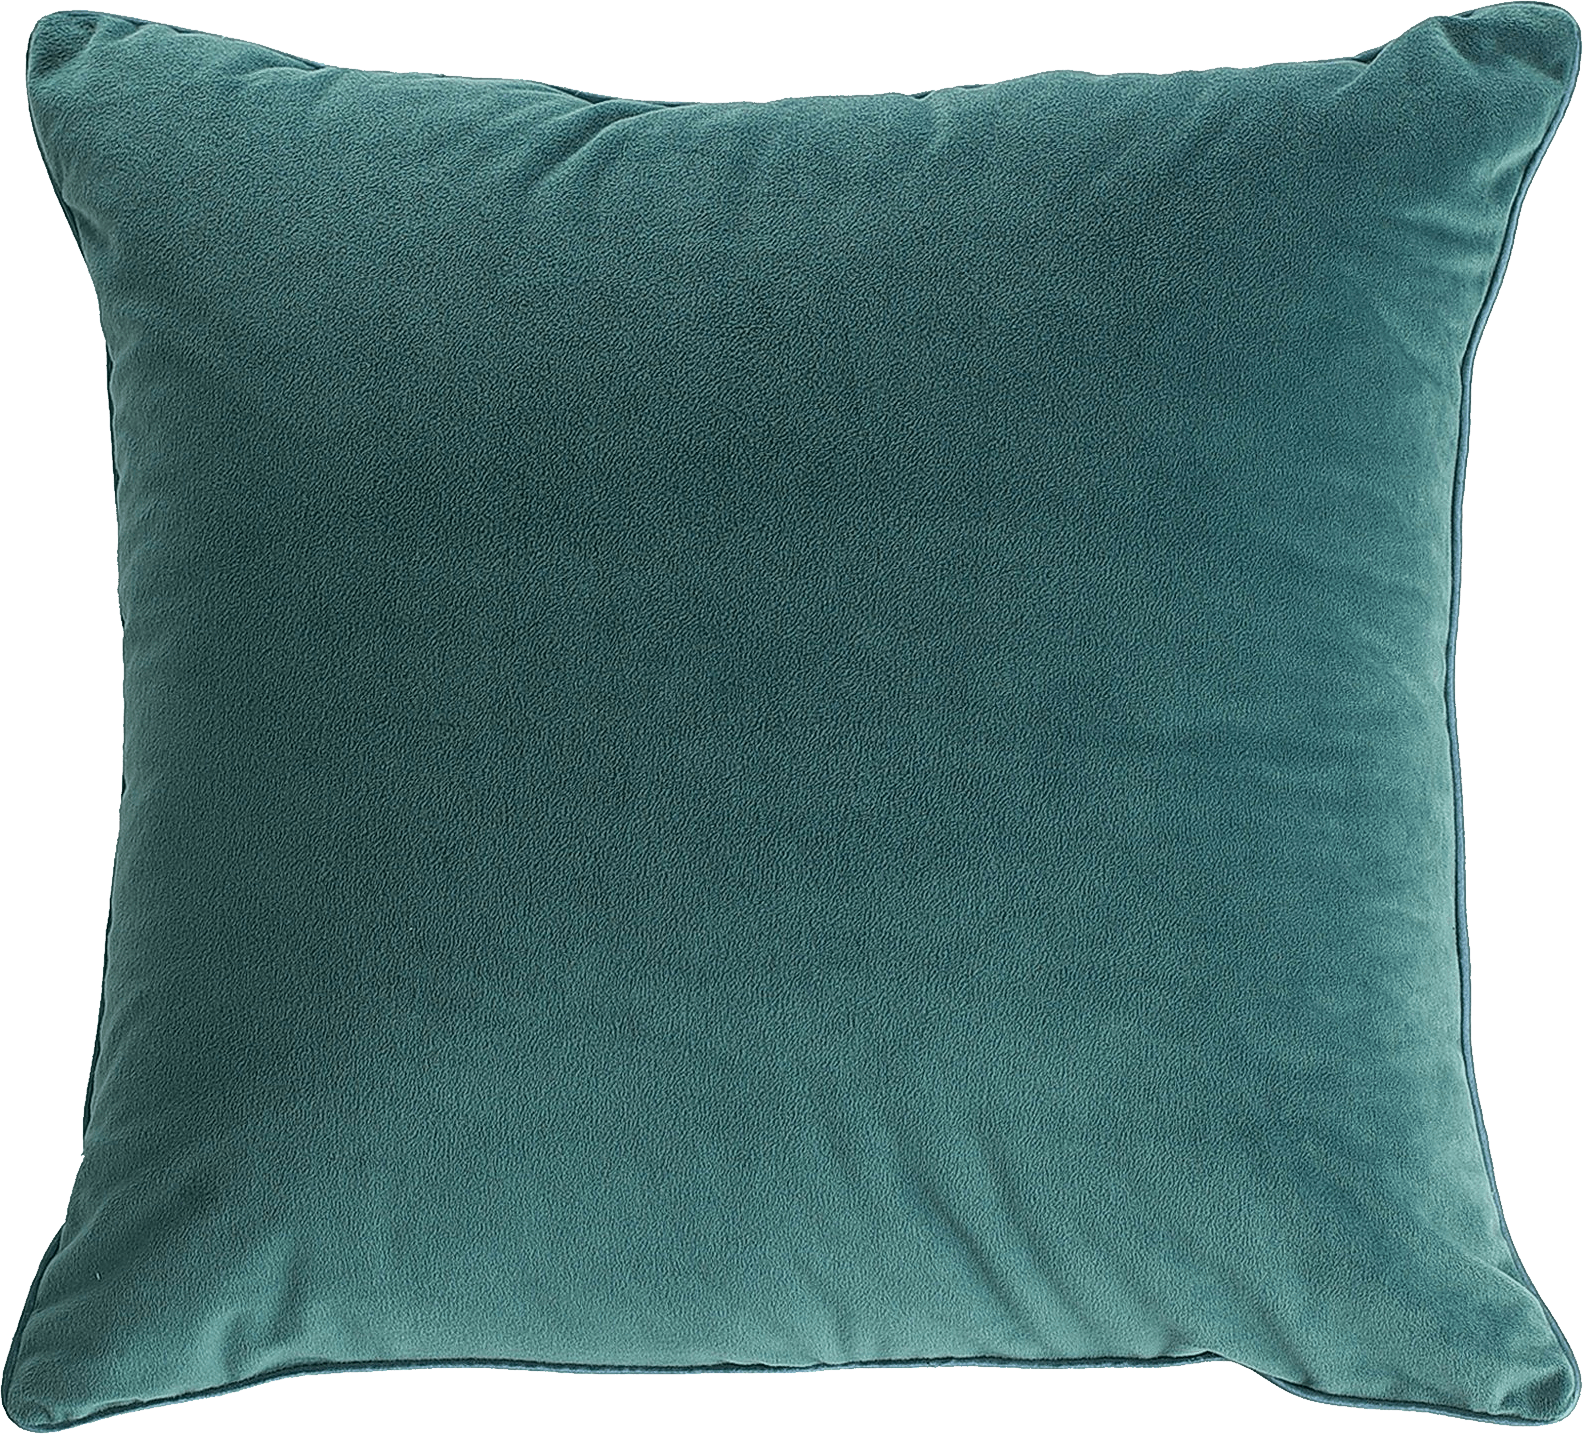 Cushion Fabric PNG Pic